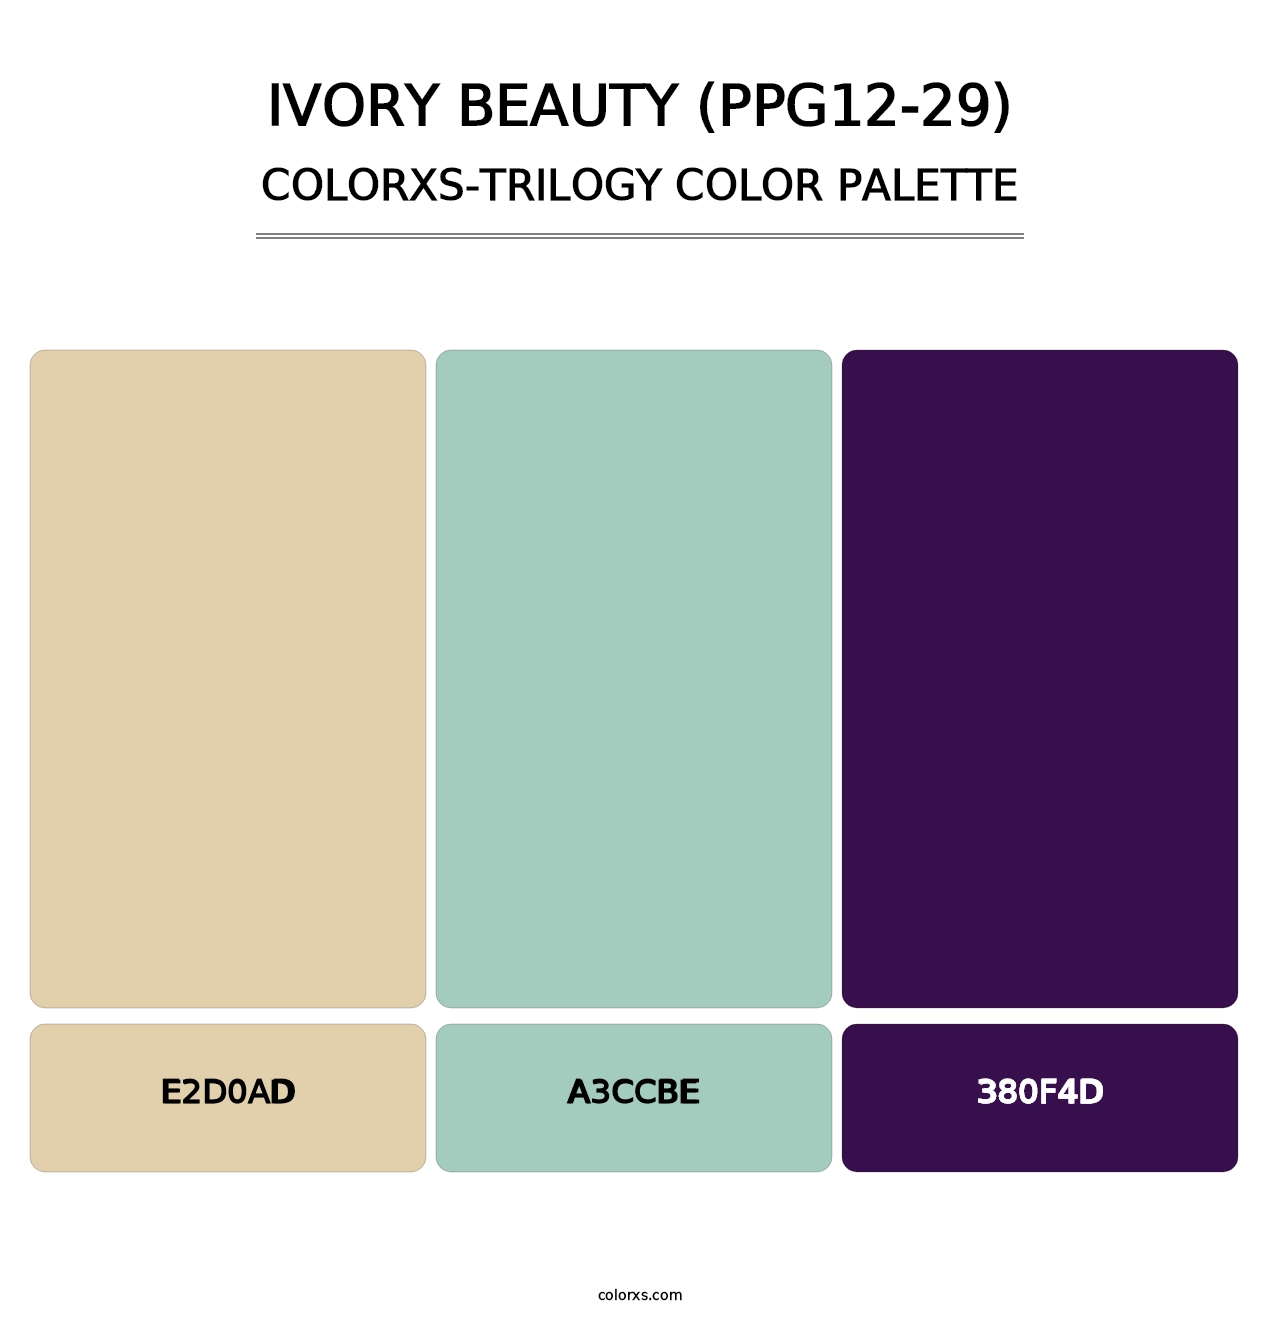 Ivory Beauty (PPG12-29) - Colorxs Trilogy Palette